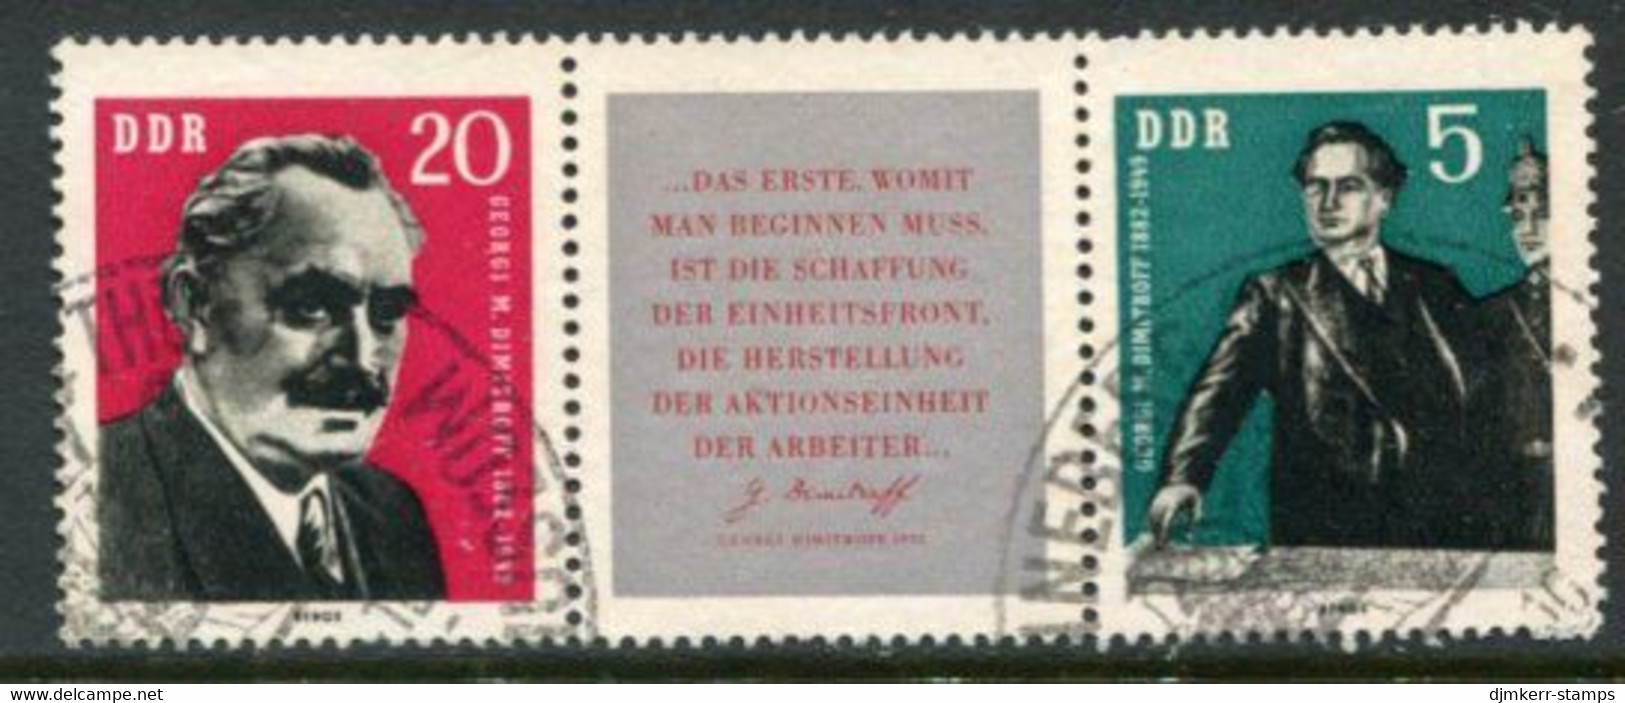 DDR / E. GERMANY 1962 Dimitrov 80th Birthday Strip Used  Michel  893-94 - Usati